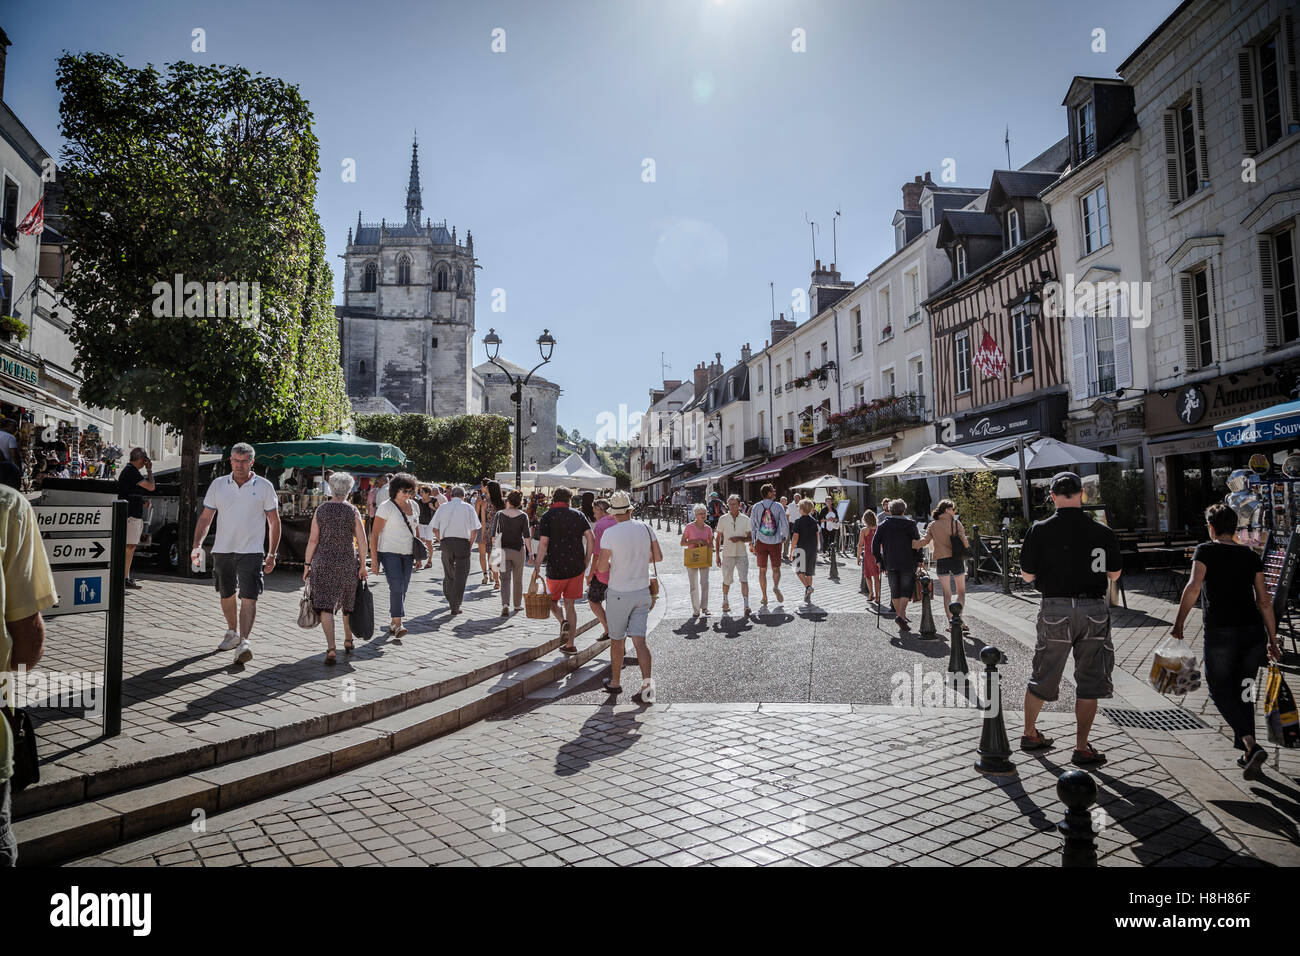 View of a street near of the Amboise castle, La Loire, France Stock Photo